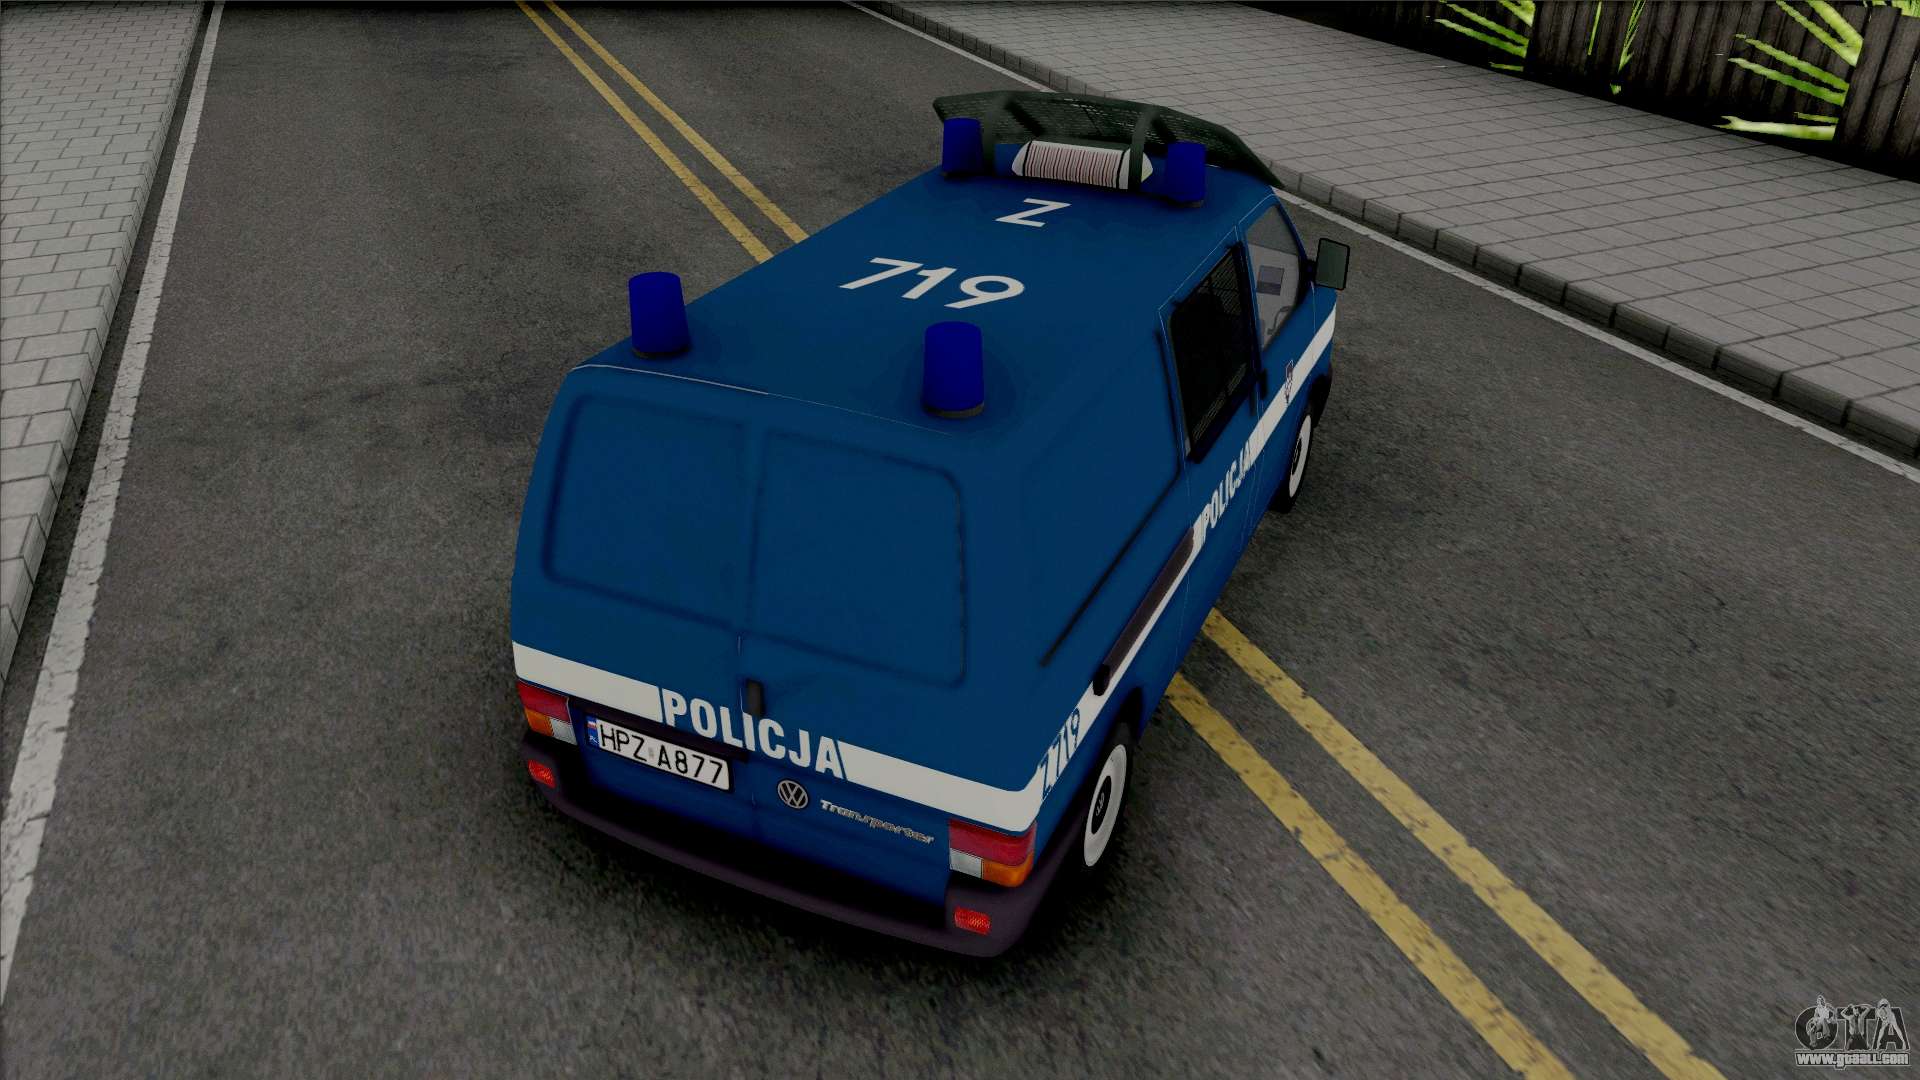 Volkswagen Transporter (T4) Policja KSP for GTA San Andreas